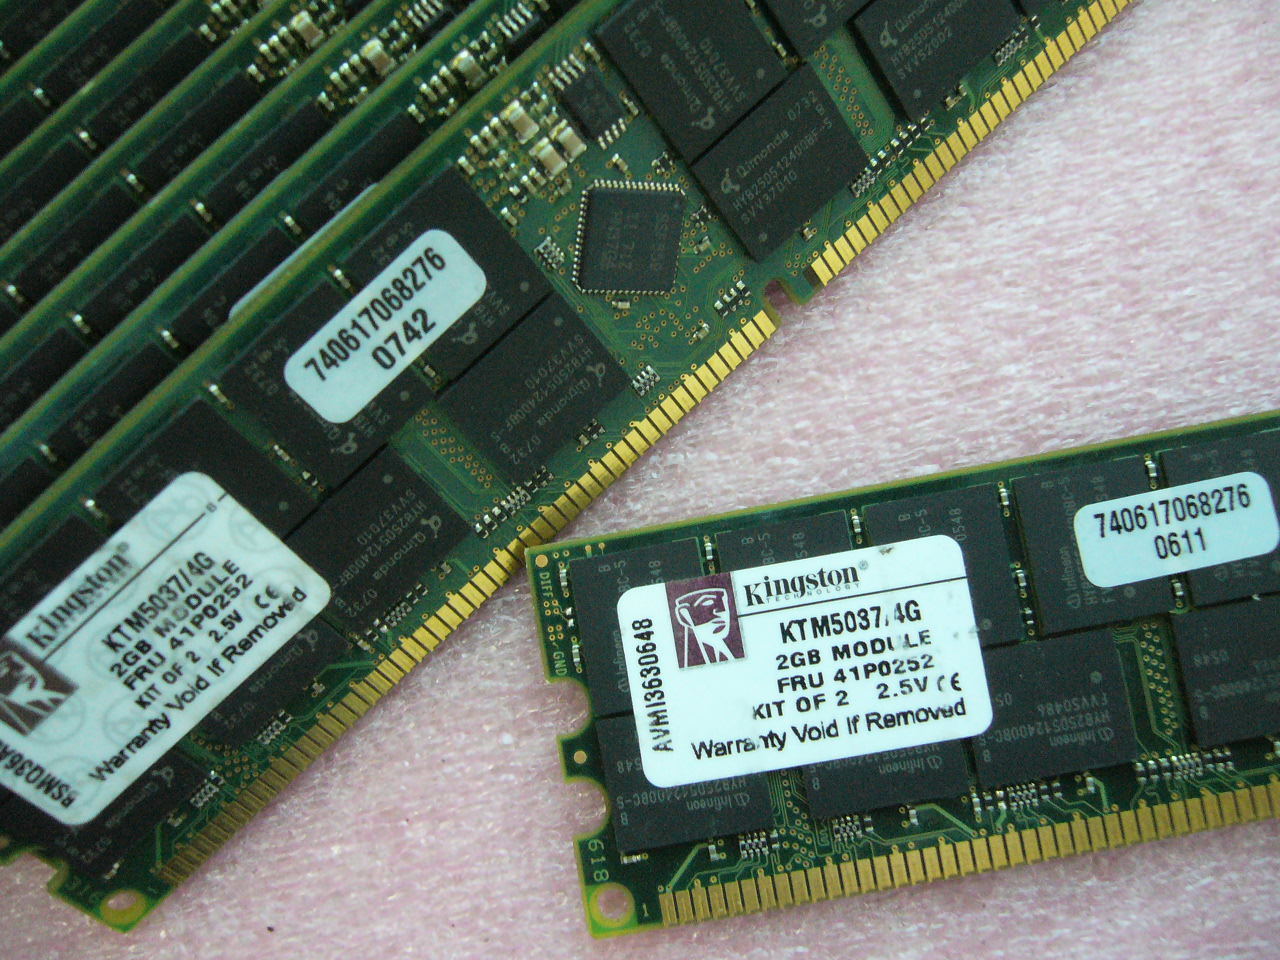 1x 2GB Kingston KTM5037/4G DDR 266,PC2100R ECC Registered Server memory 41P0252 - Click Image to Close